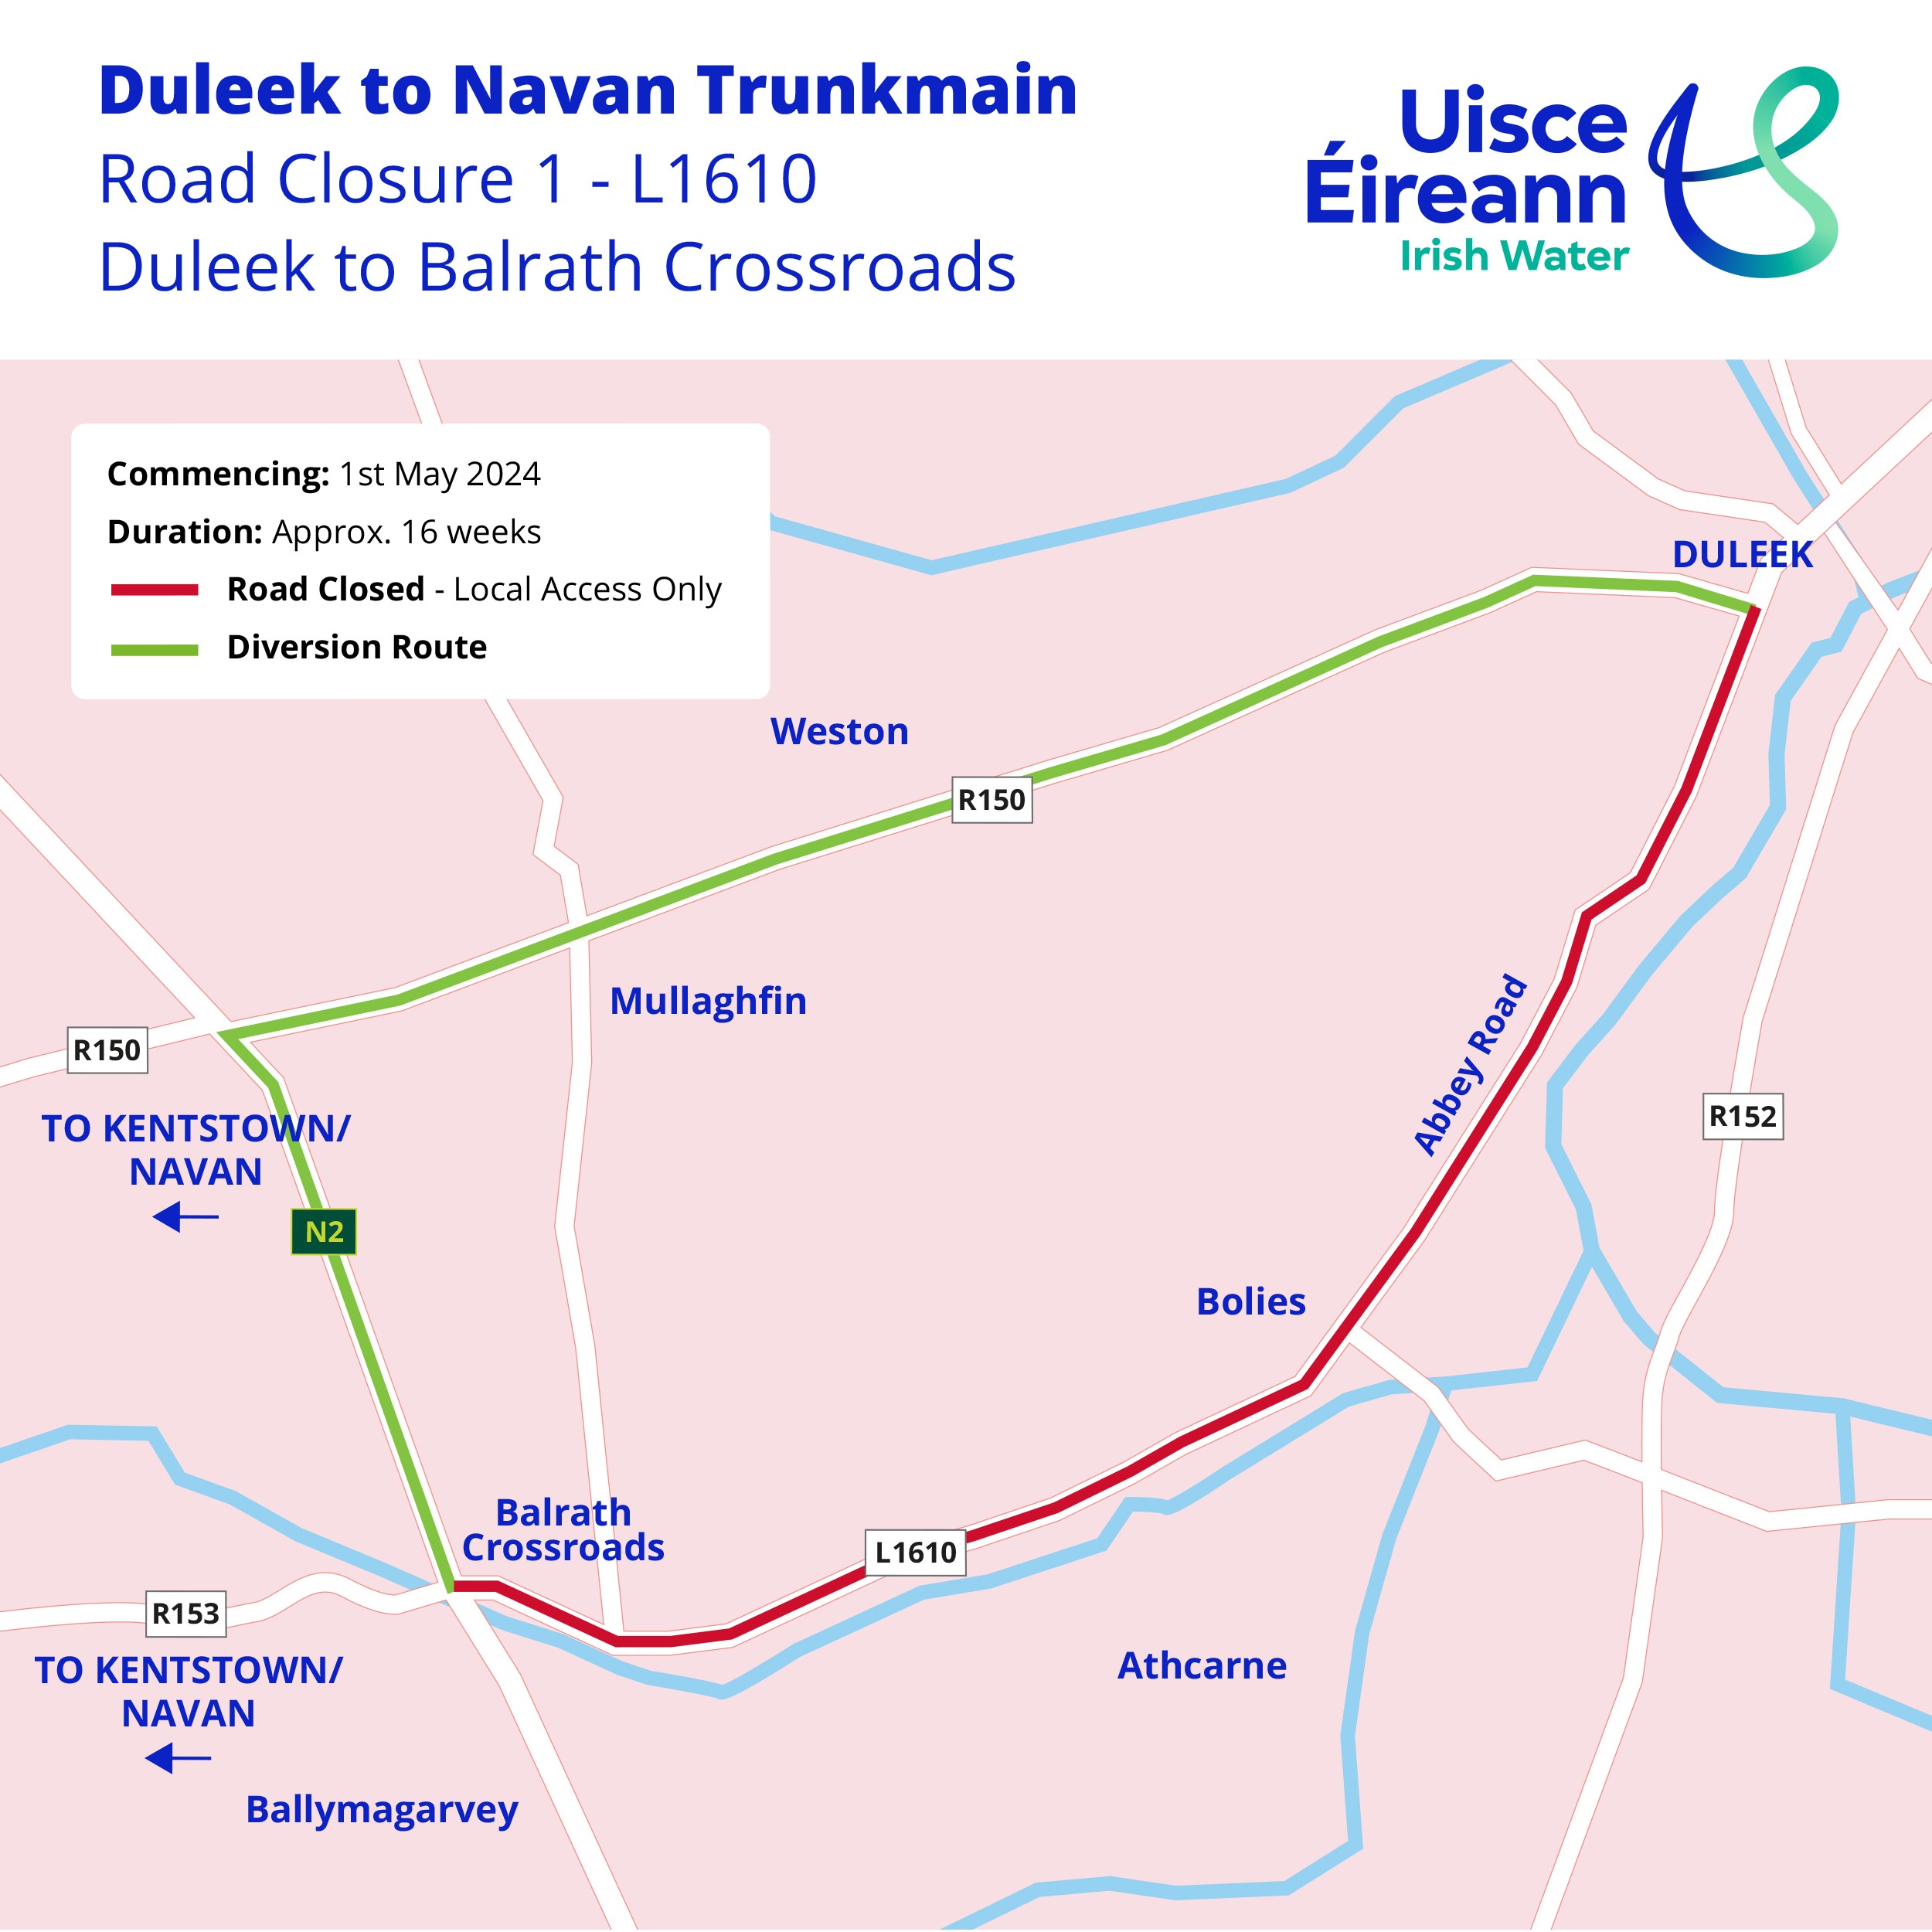 Duleek to Navan Trunkmain - Road Closure 1